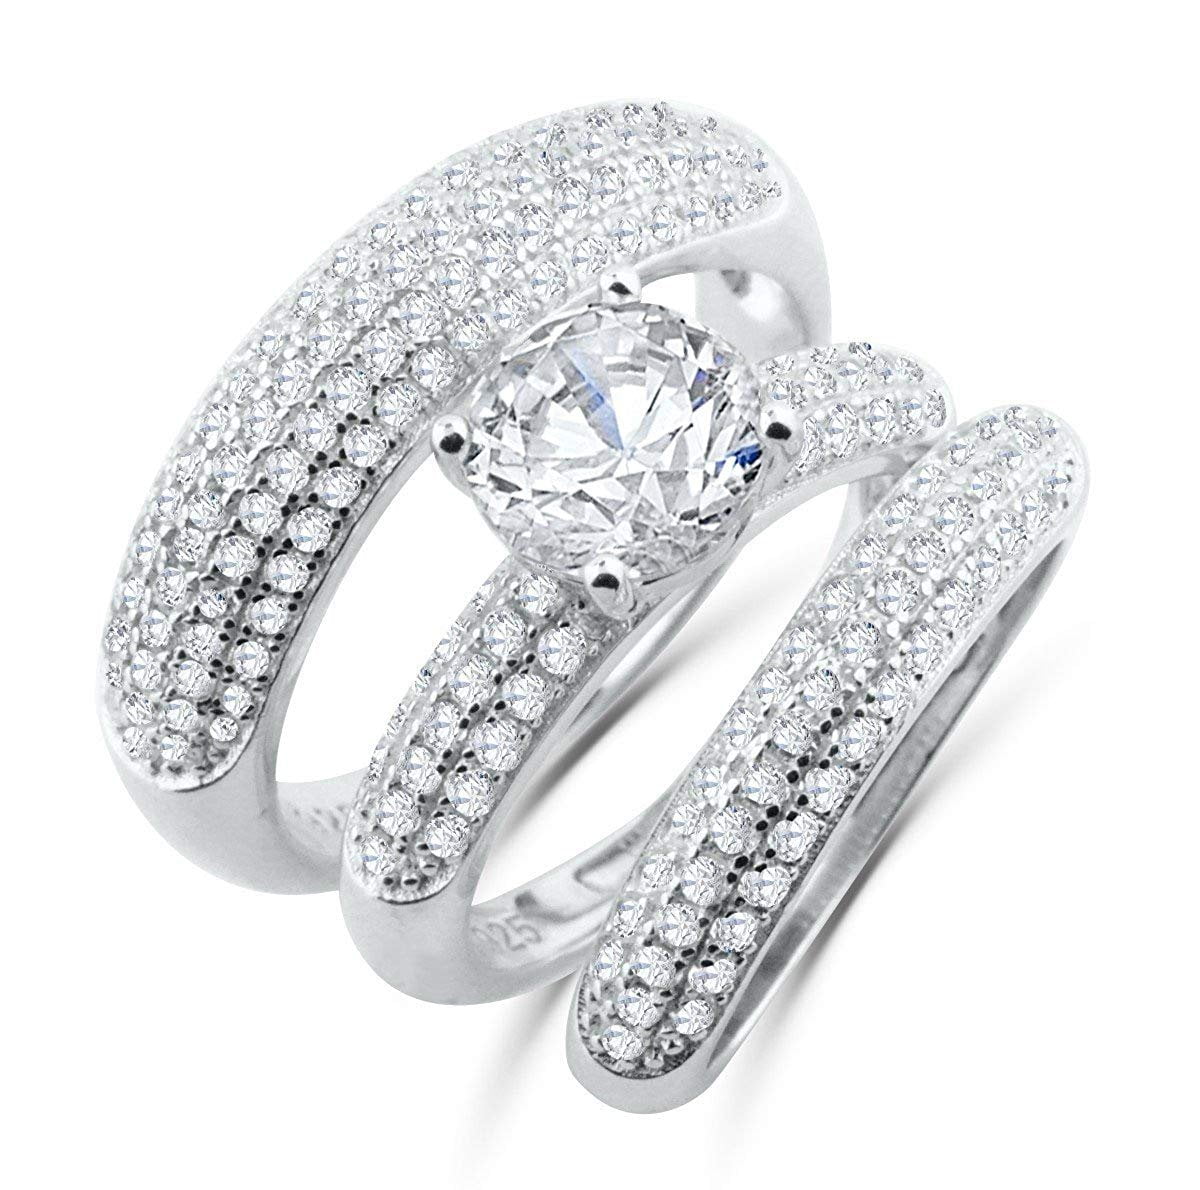 Sarene Collection Silver Wedding Rings Set Trio His and